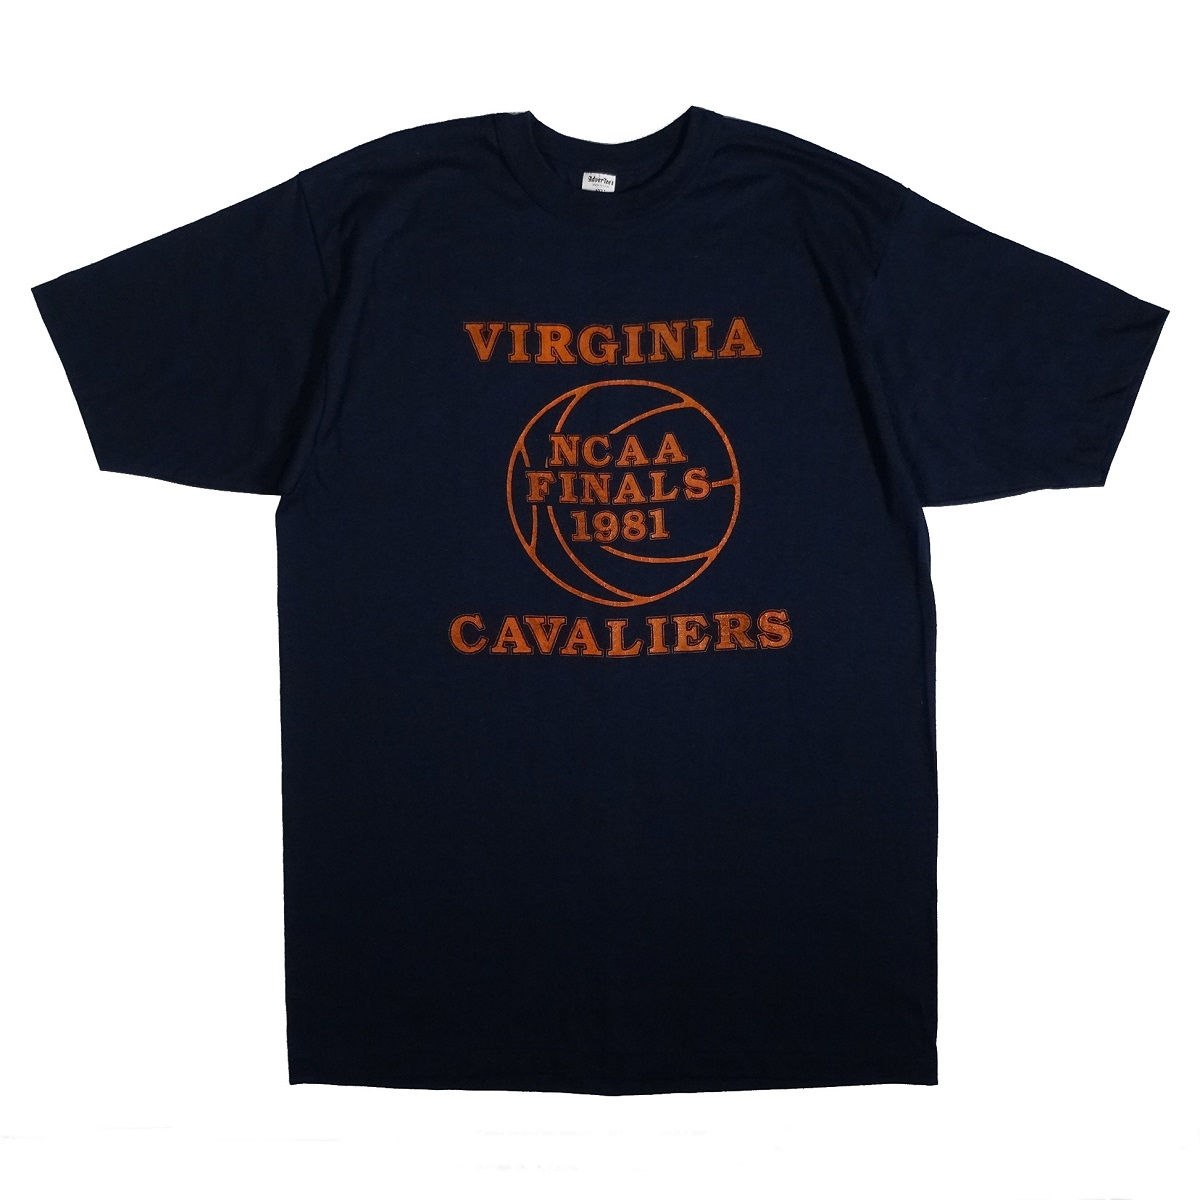 Virginia Cavaliers 1981 NCAA Finals Vintage T Shirt Front